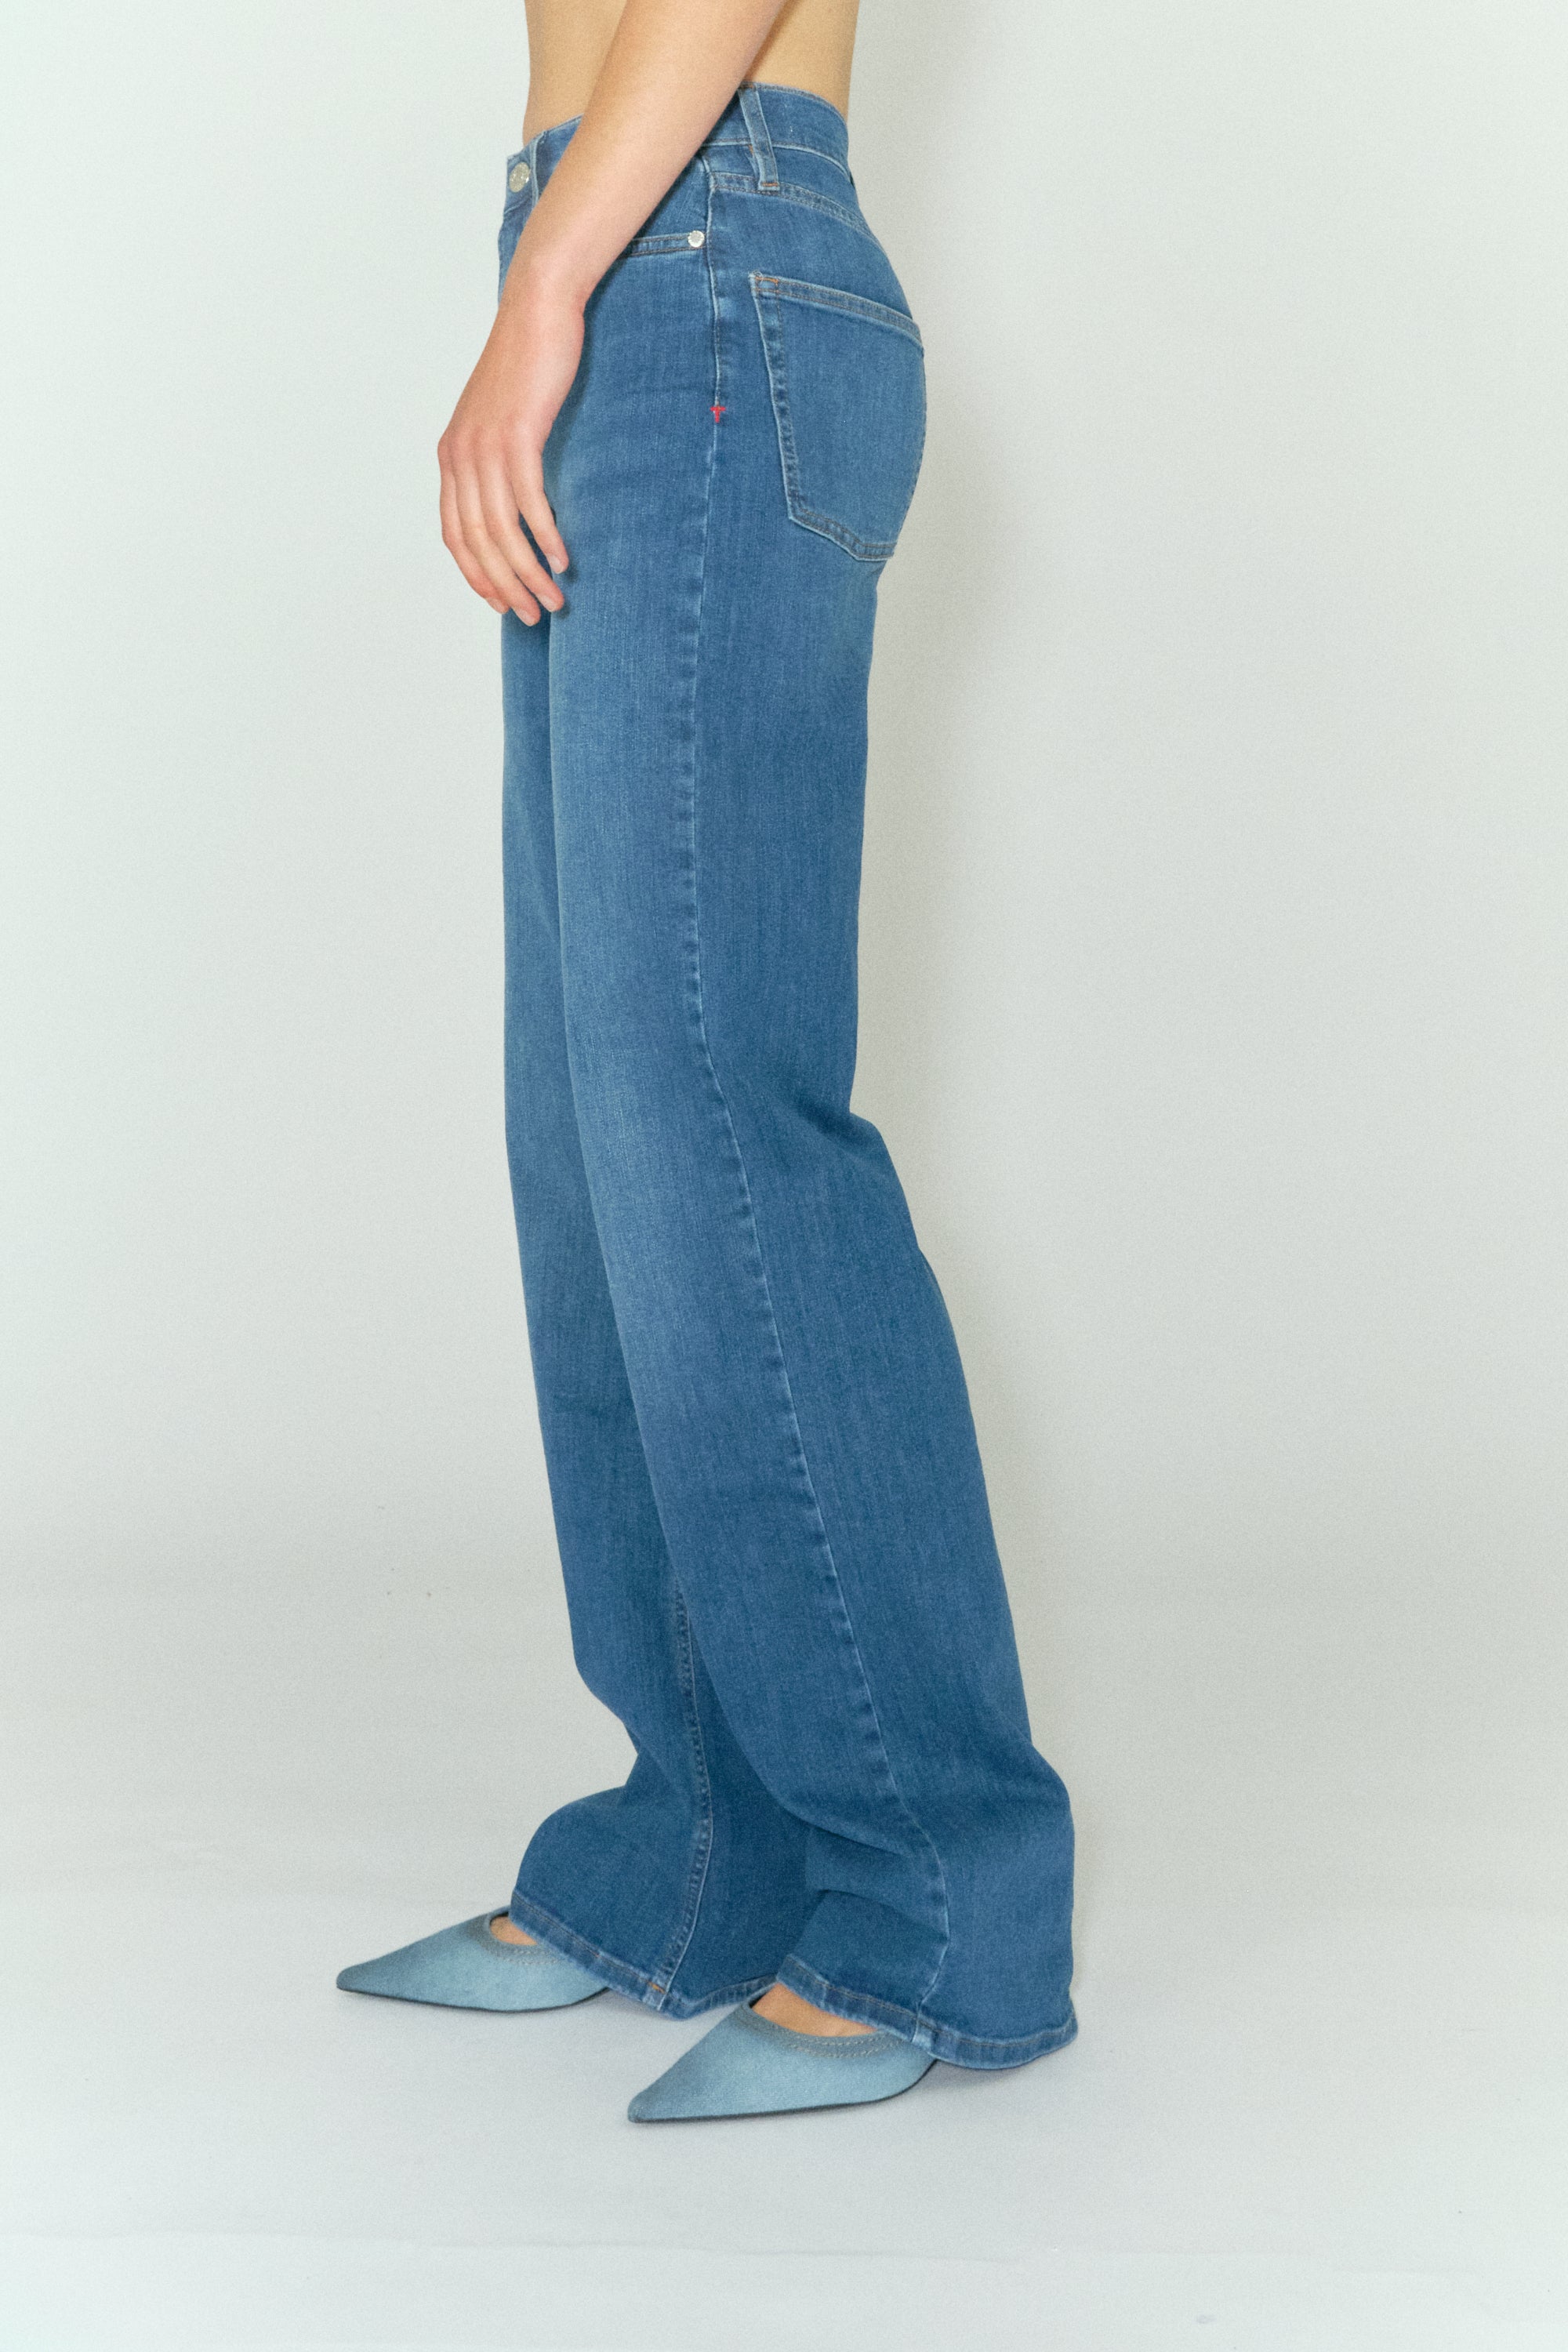 Tomorrow TMRW Brown Jeans - Florence Jeans & Pants 51 Denim Blue